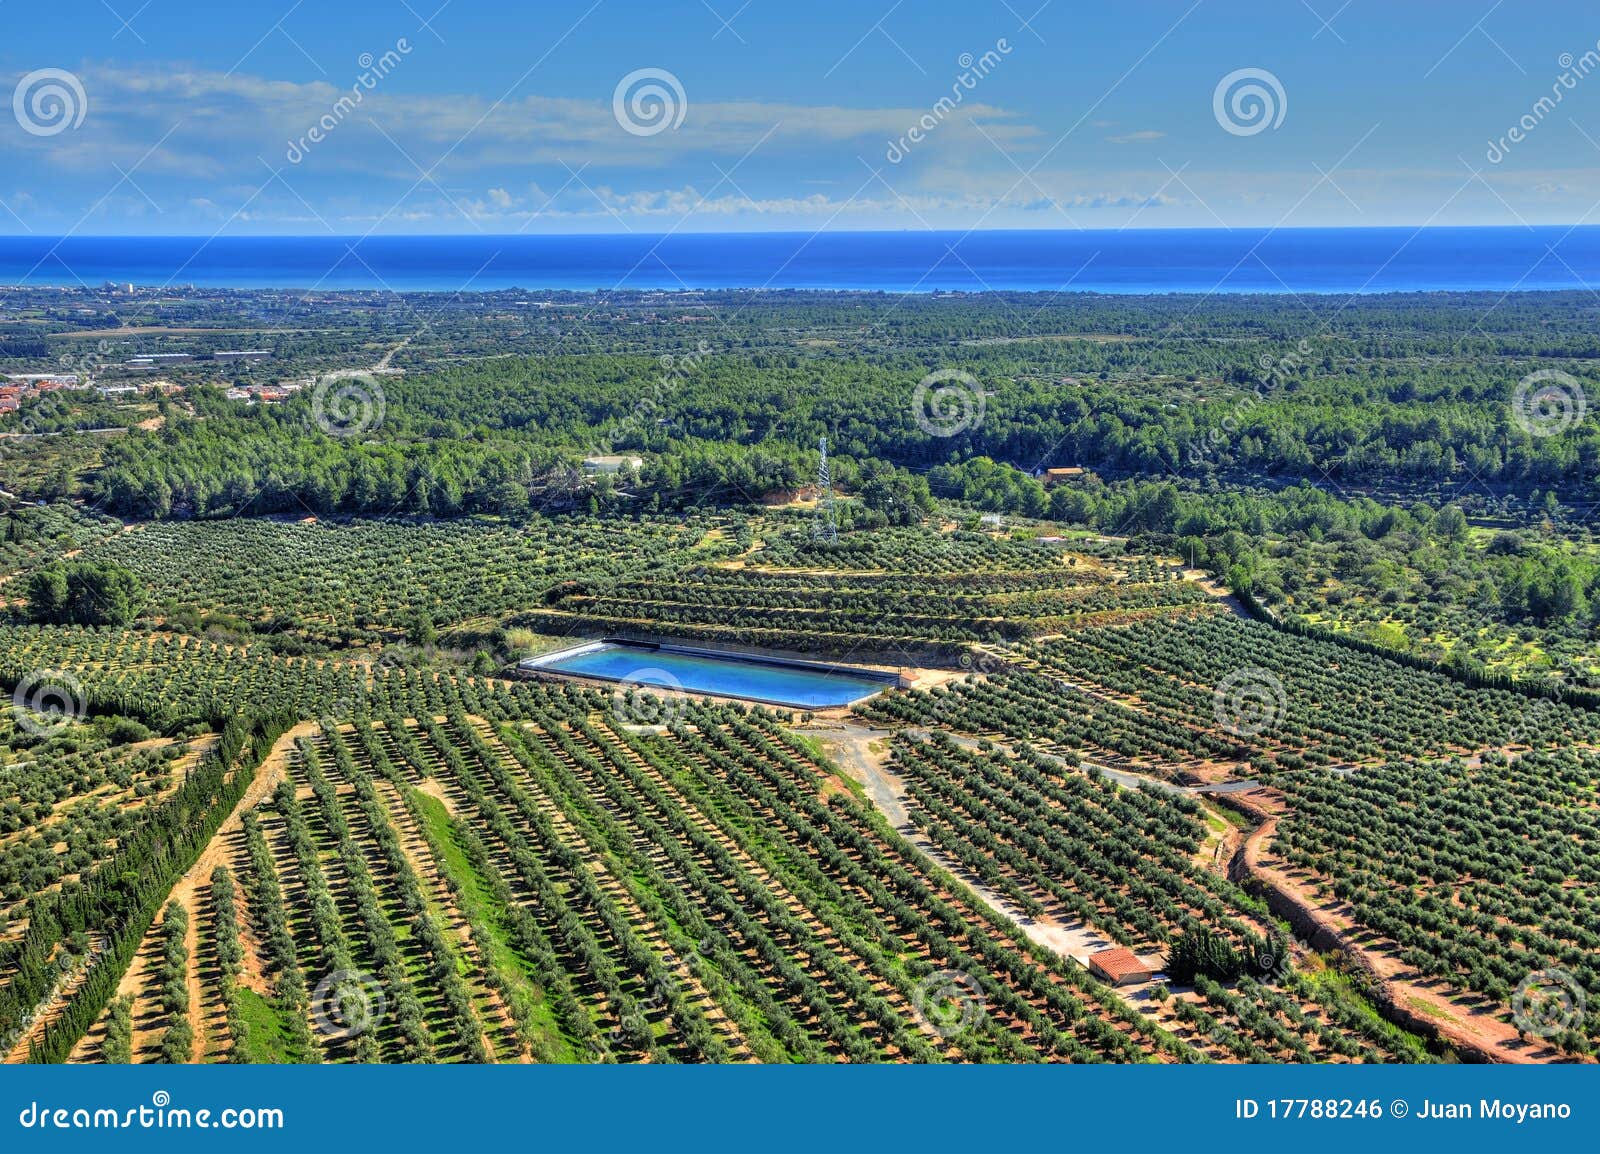 olive groves in costa daurada, spain